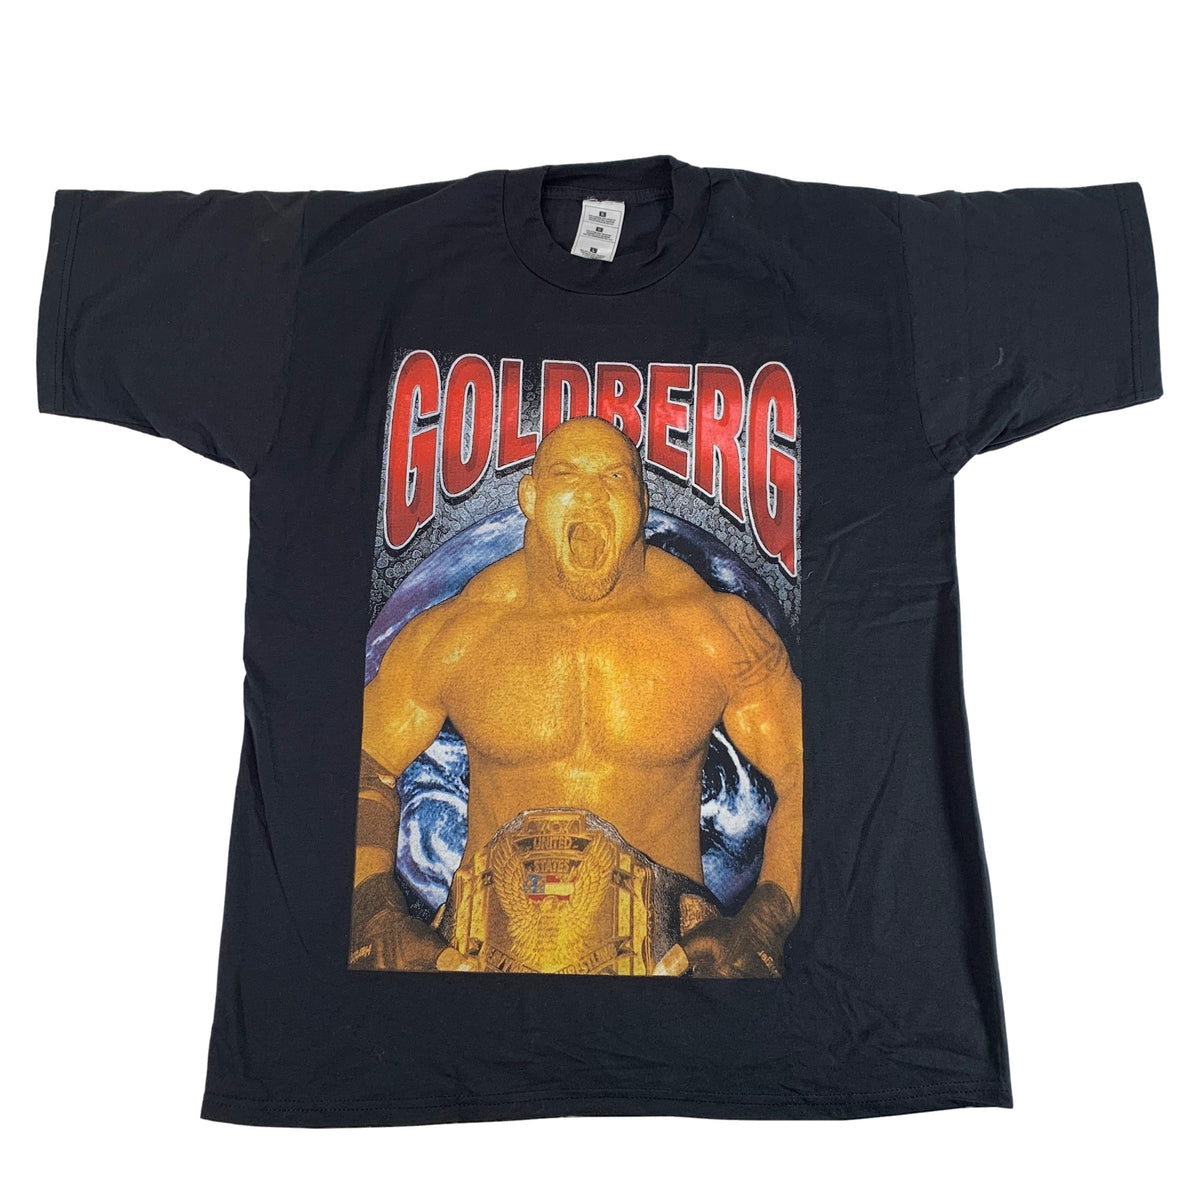 Vintage Goldberg &quot;WCW&quot; T-Shirt - jointcustodydc